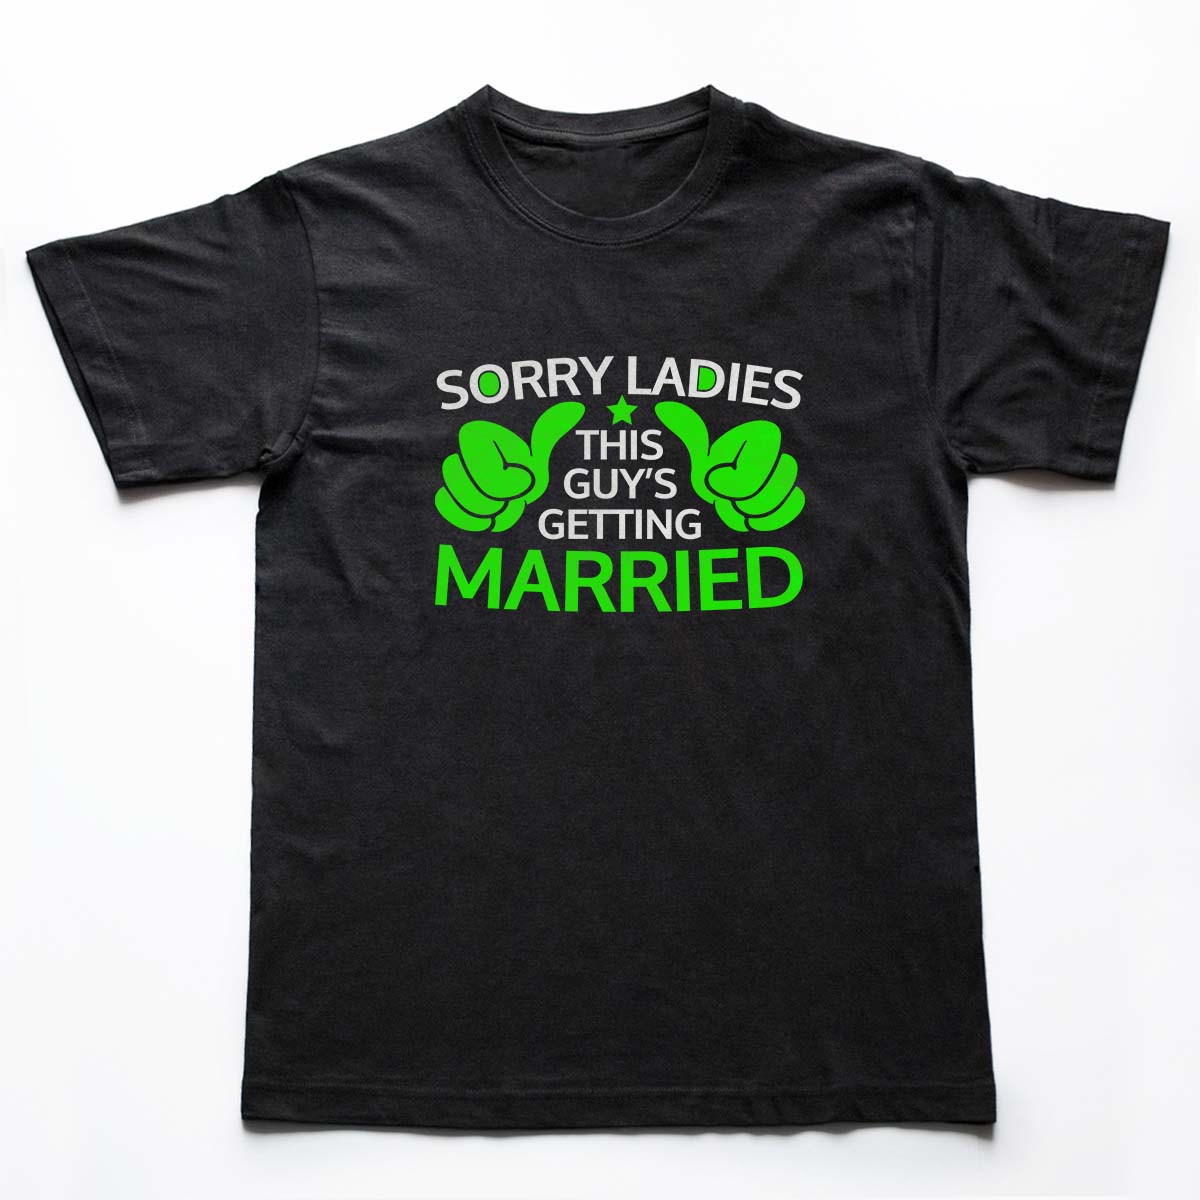 Tricouri petrecerea burlacilor - Sorry ladies 2